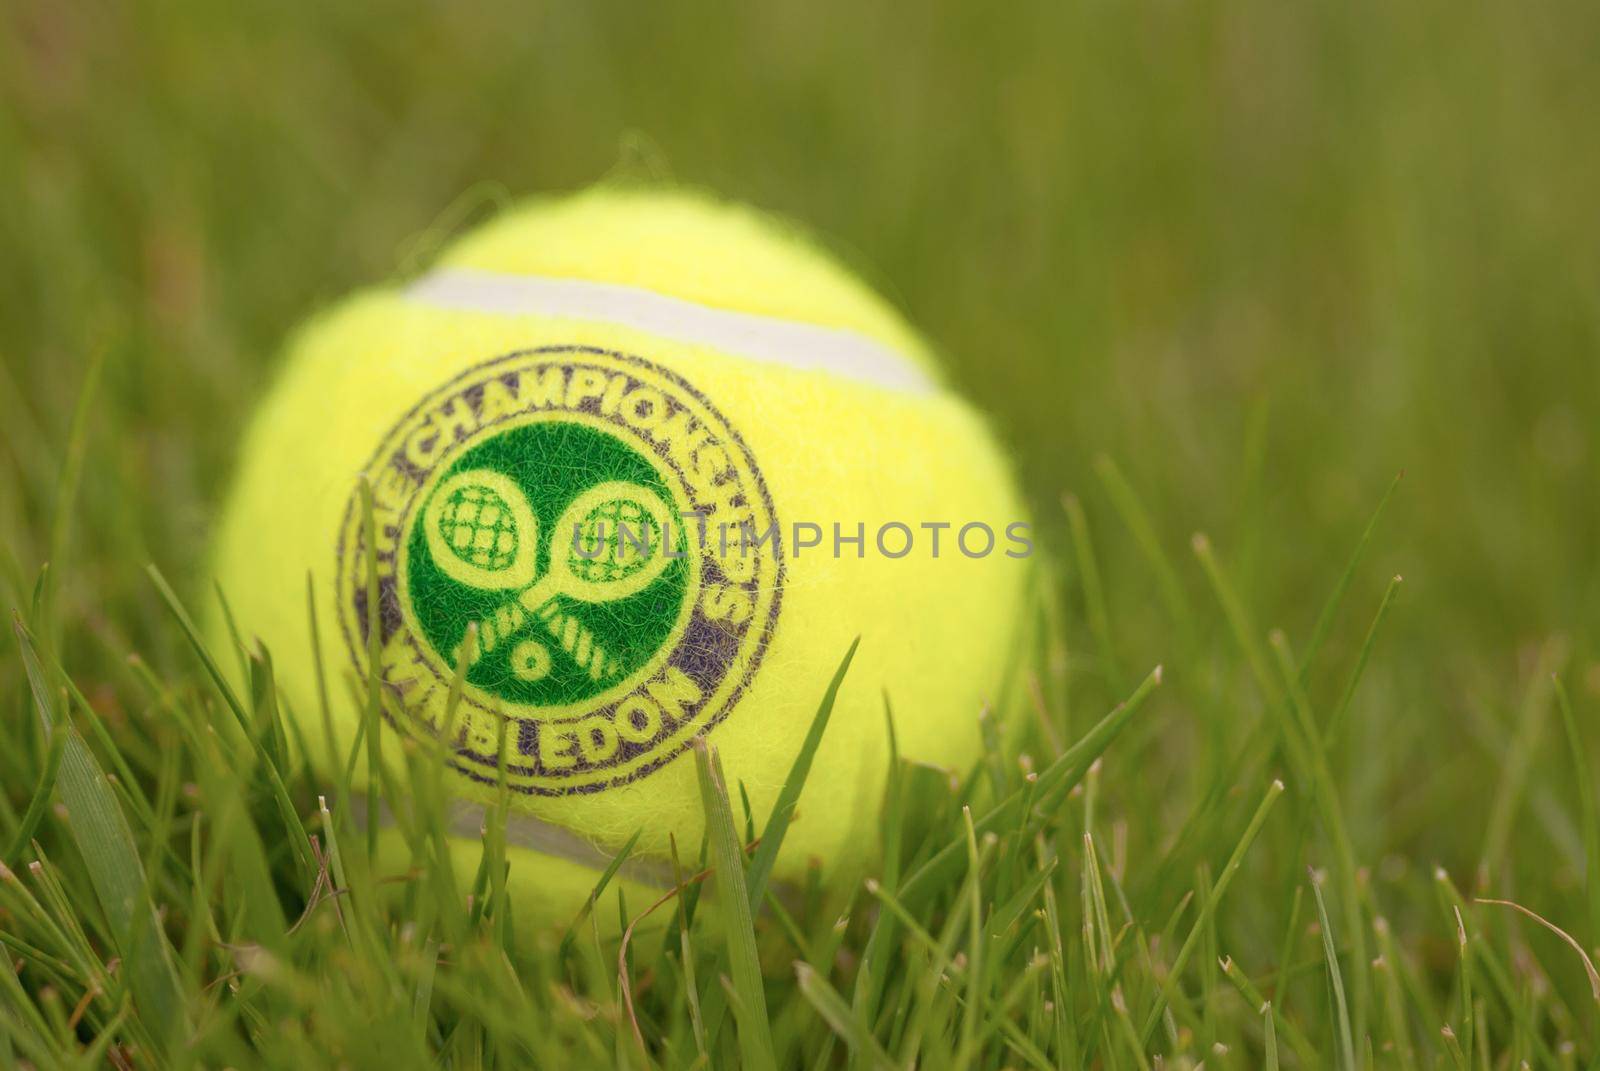 Official Tennis Ball for Tradidional Tournament at Wimbledon, London, UK by wondry